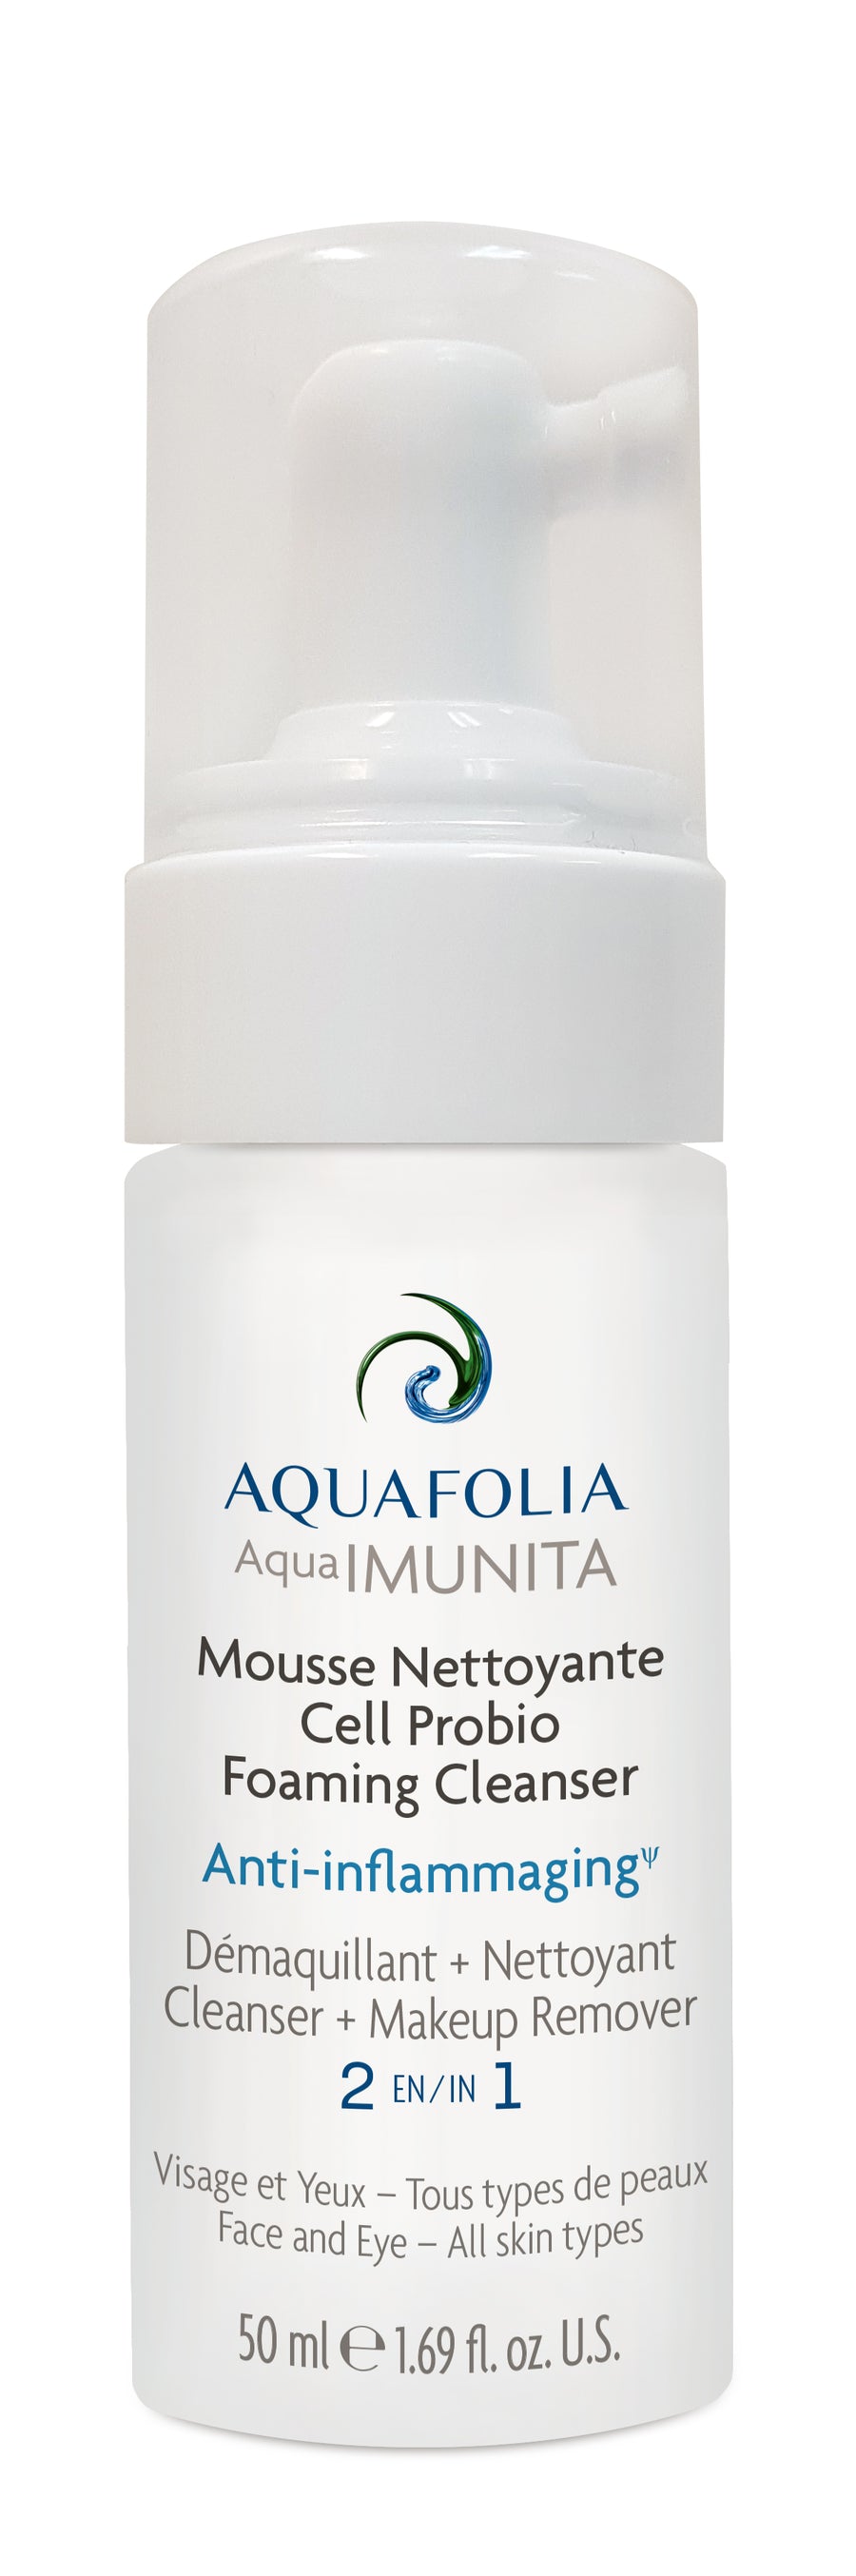 Aquafolia - Cell Probio Cleansing Foam - AquaIMUNITA